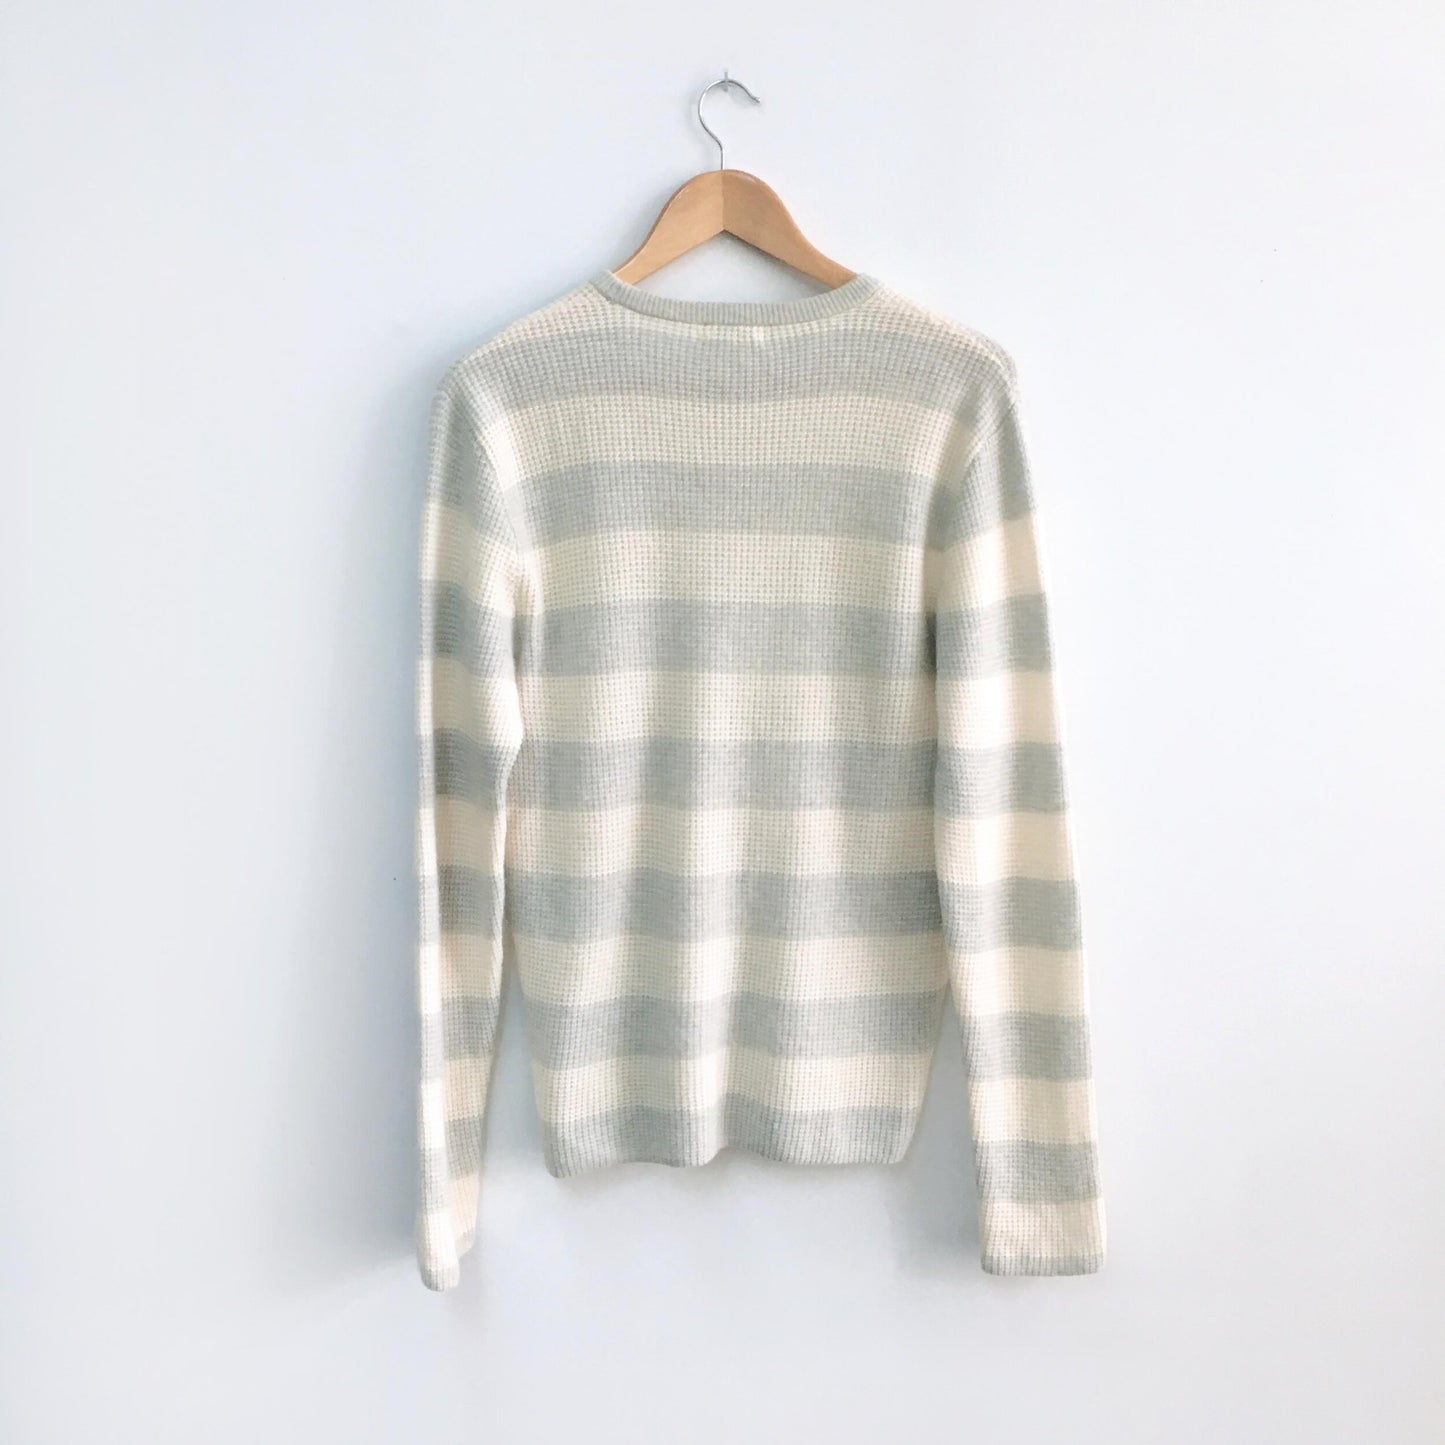 Club Monaco 100% Cashmere Sweater - size xs